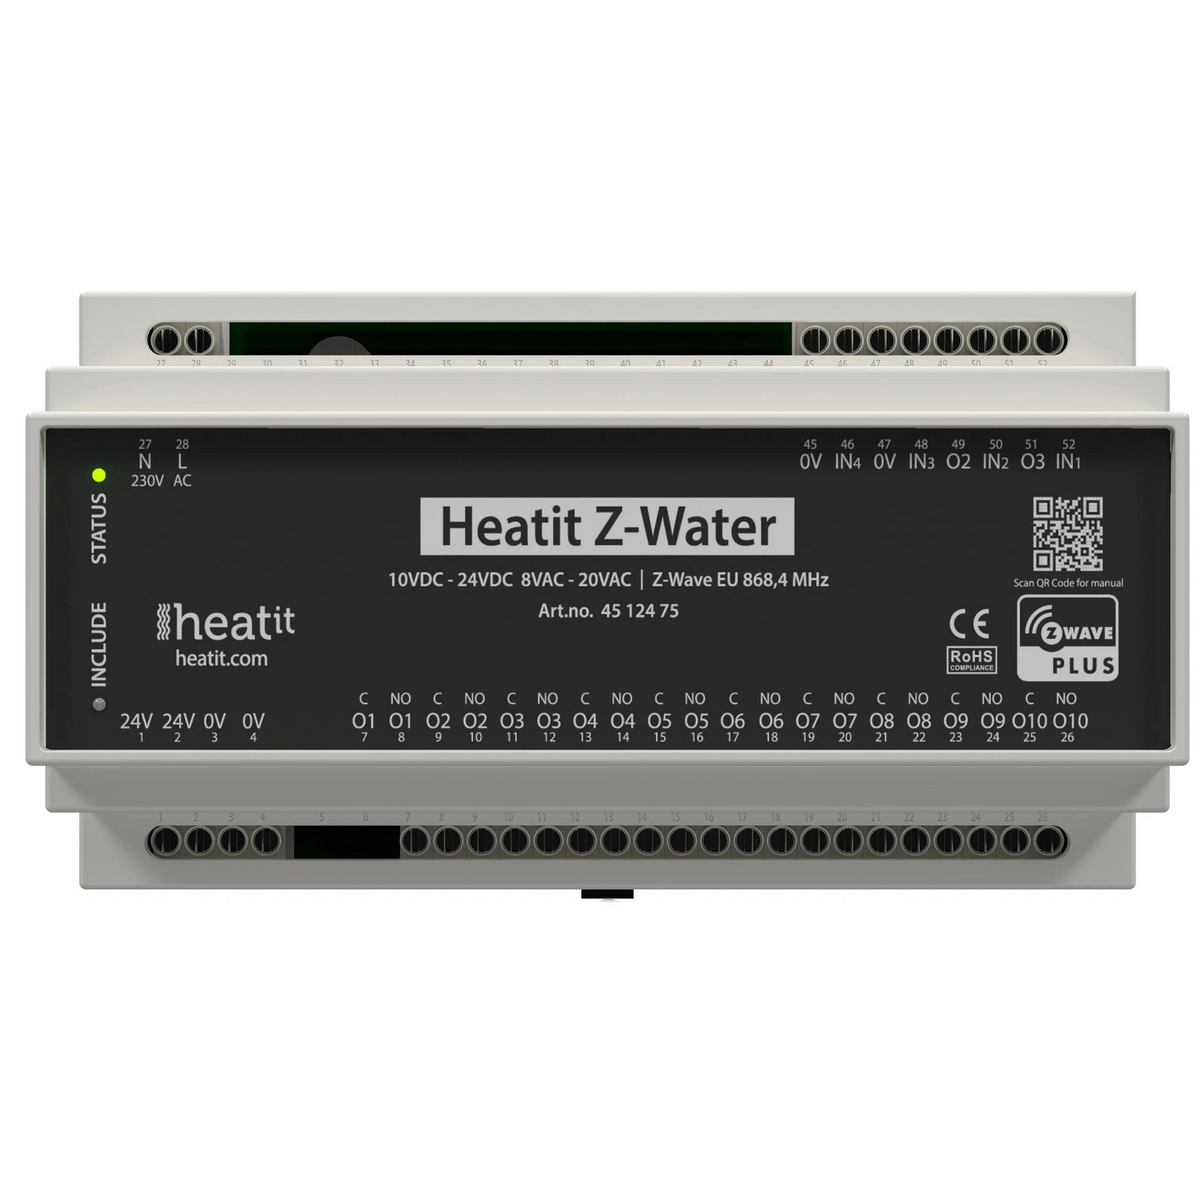 Heatit Z-Water Z-Wave Wet Underfloor Heating Controller